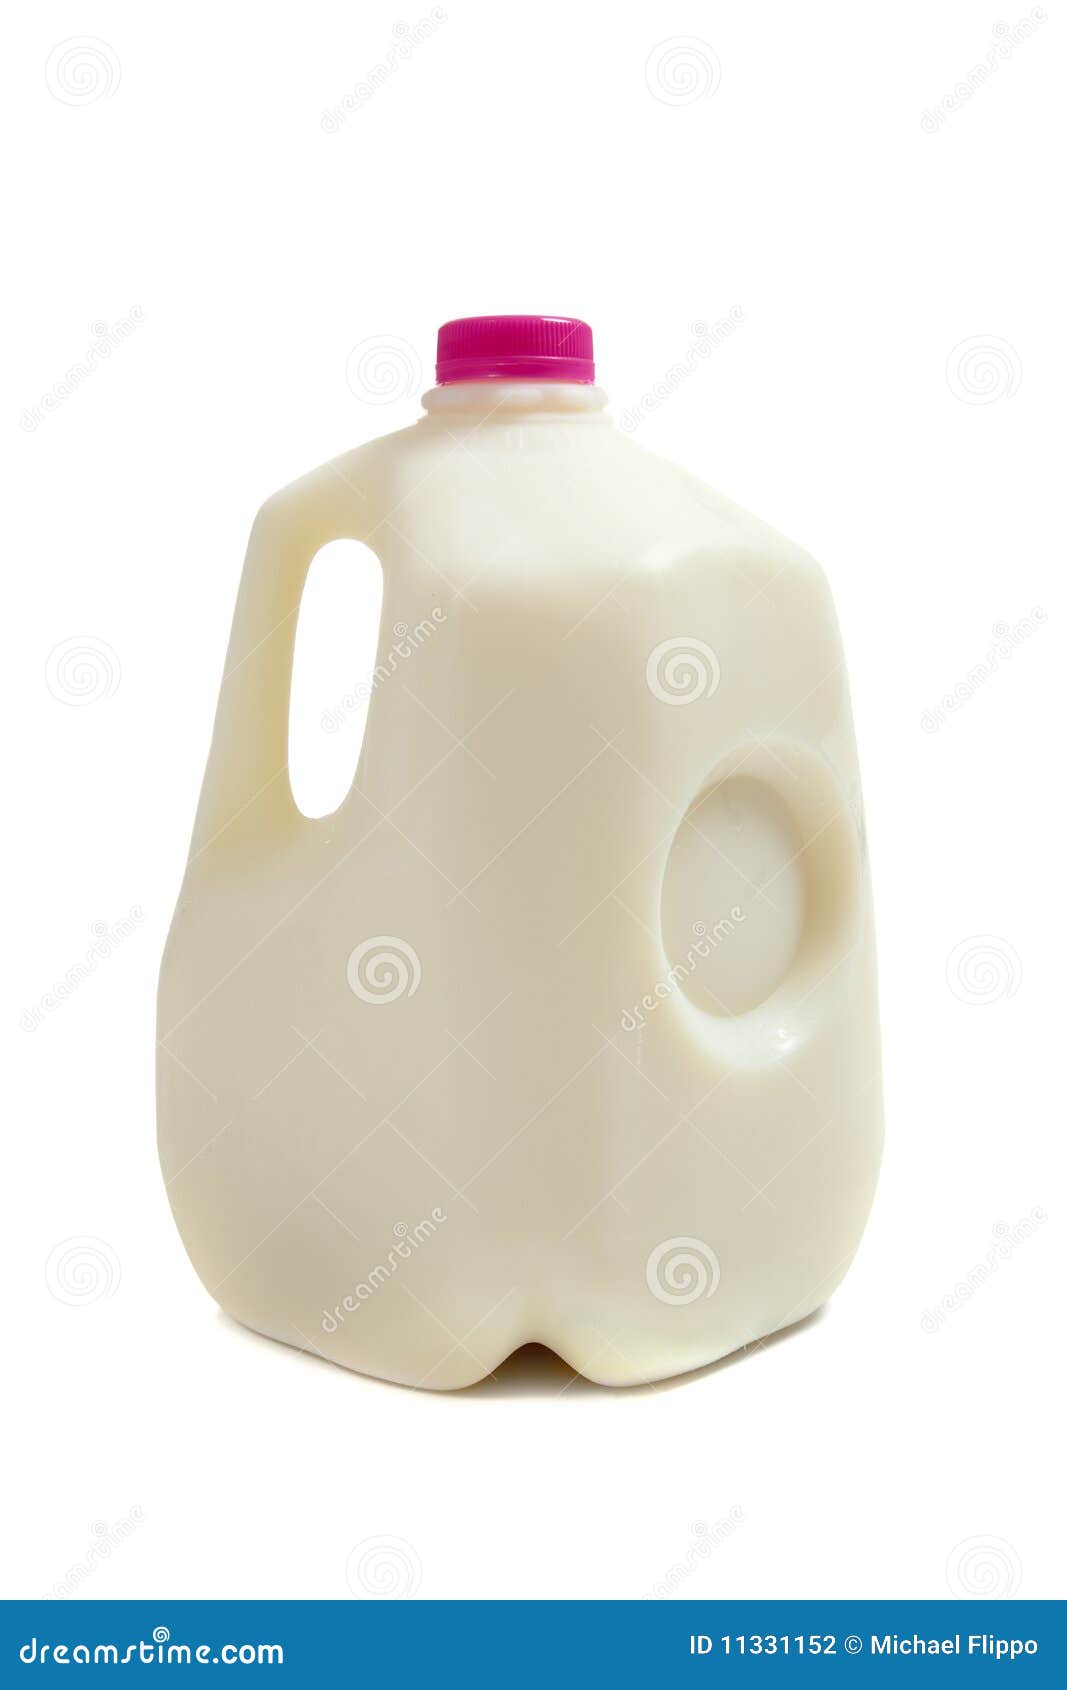 gallon jug of milk